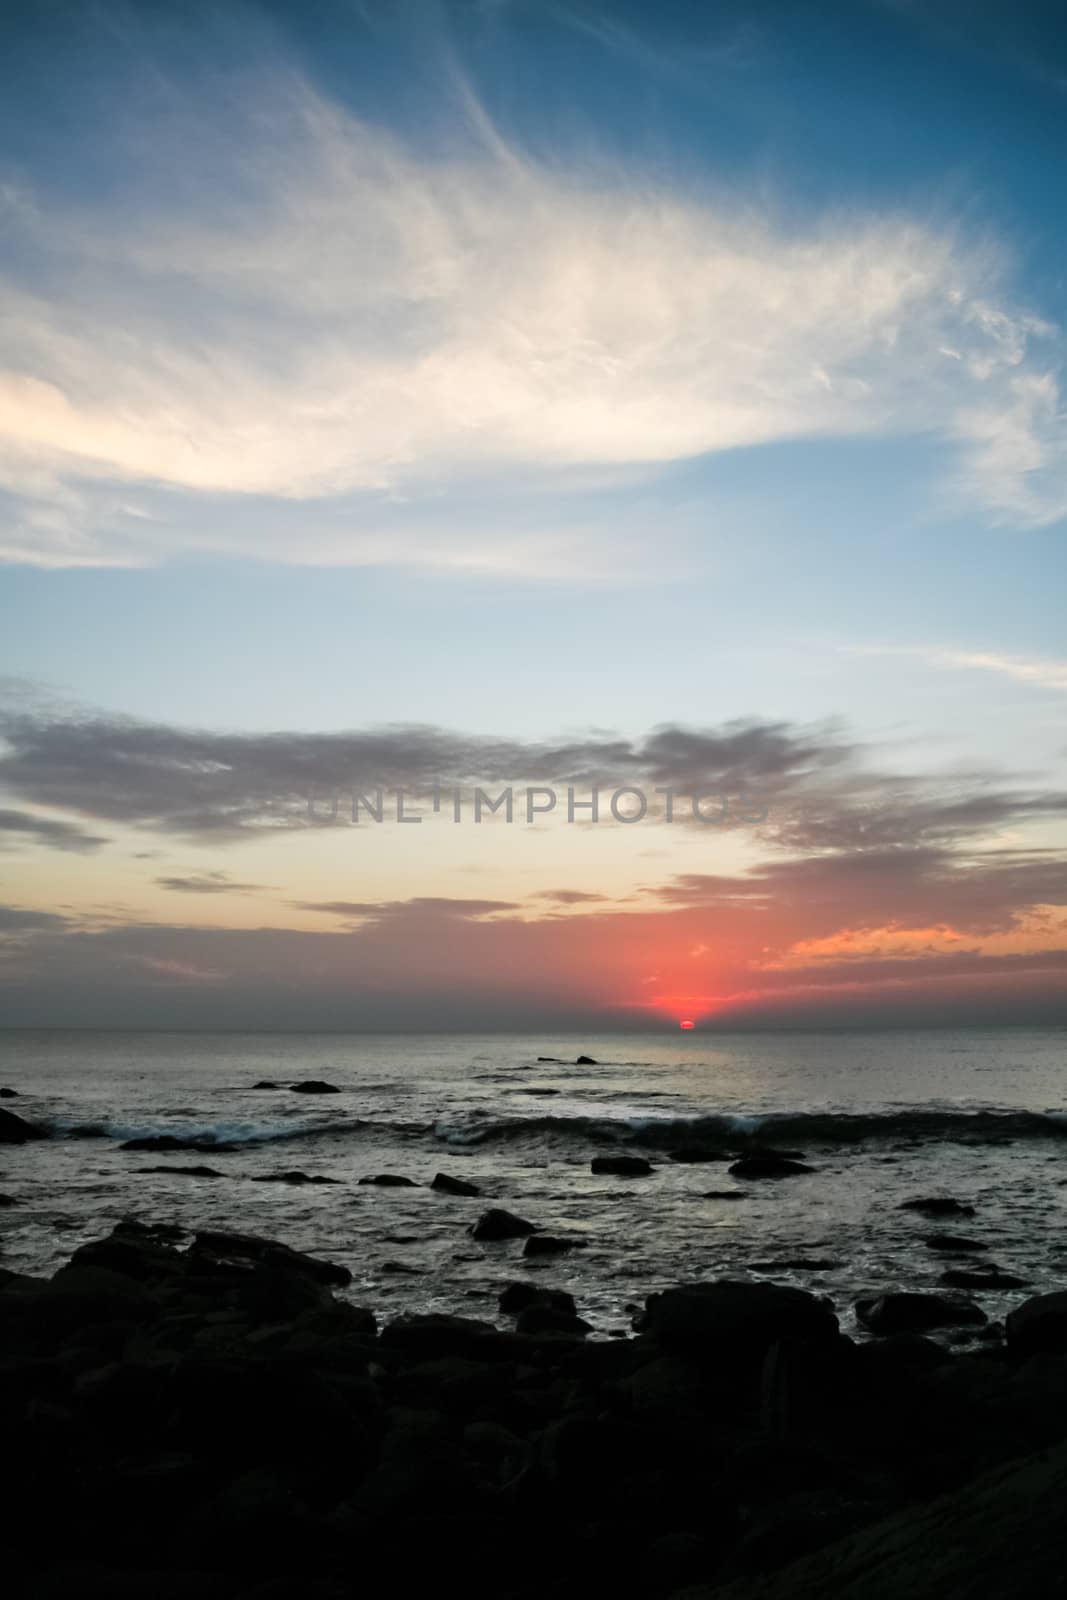 Calm sunset over ocean by juhku